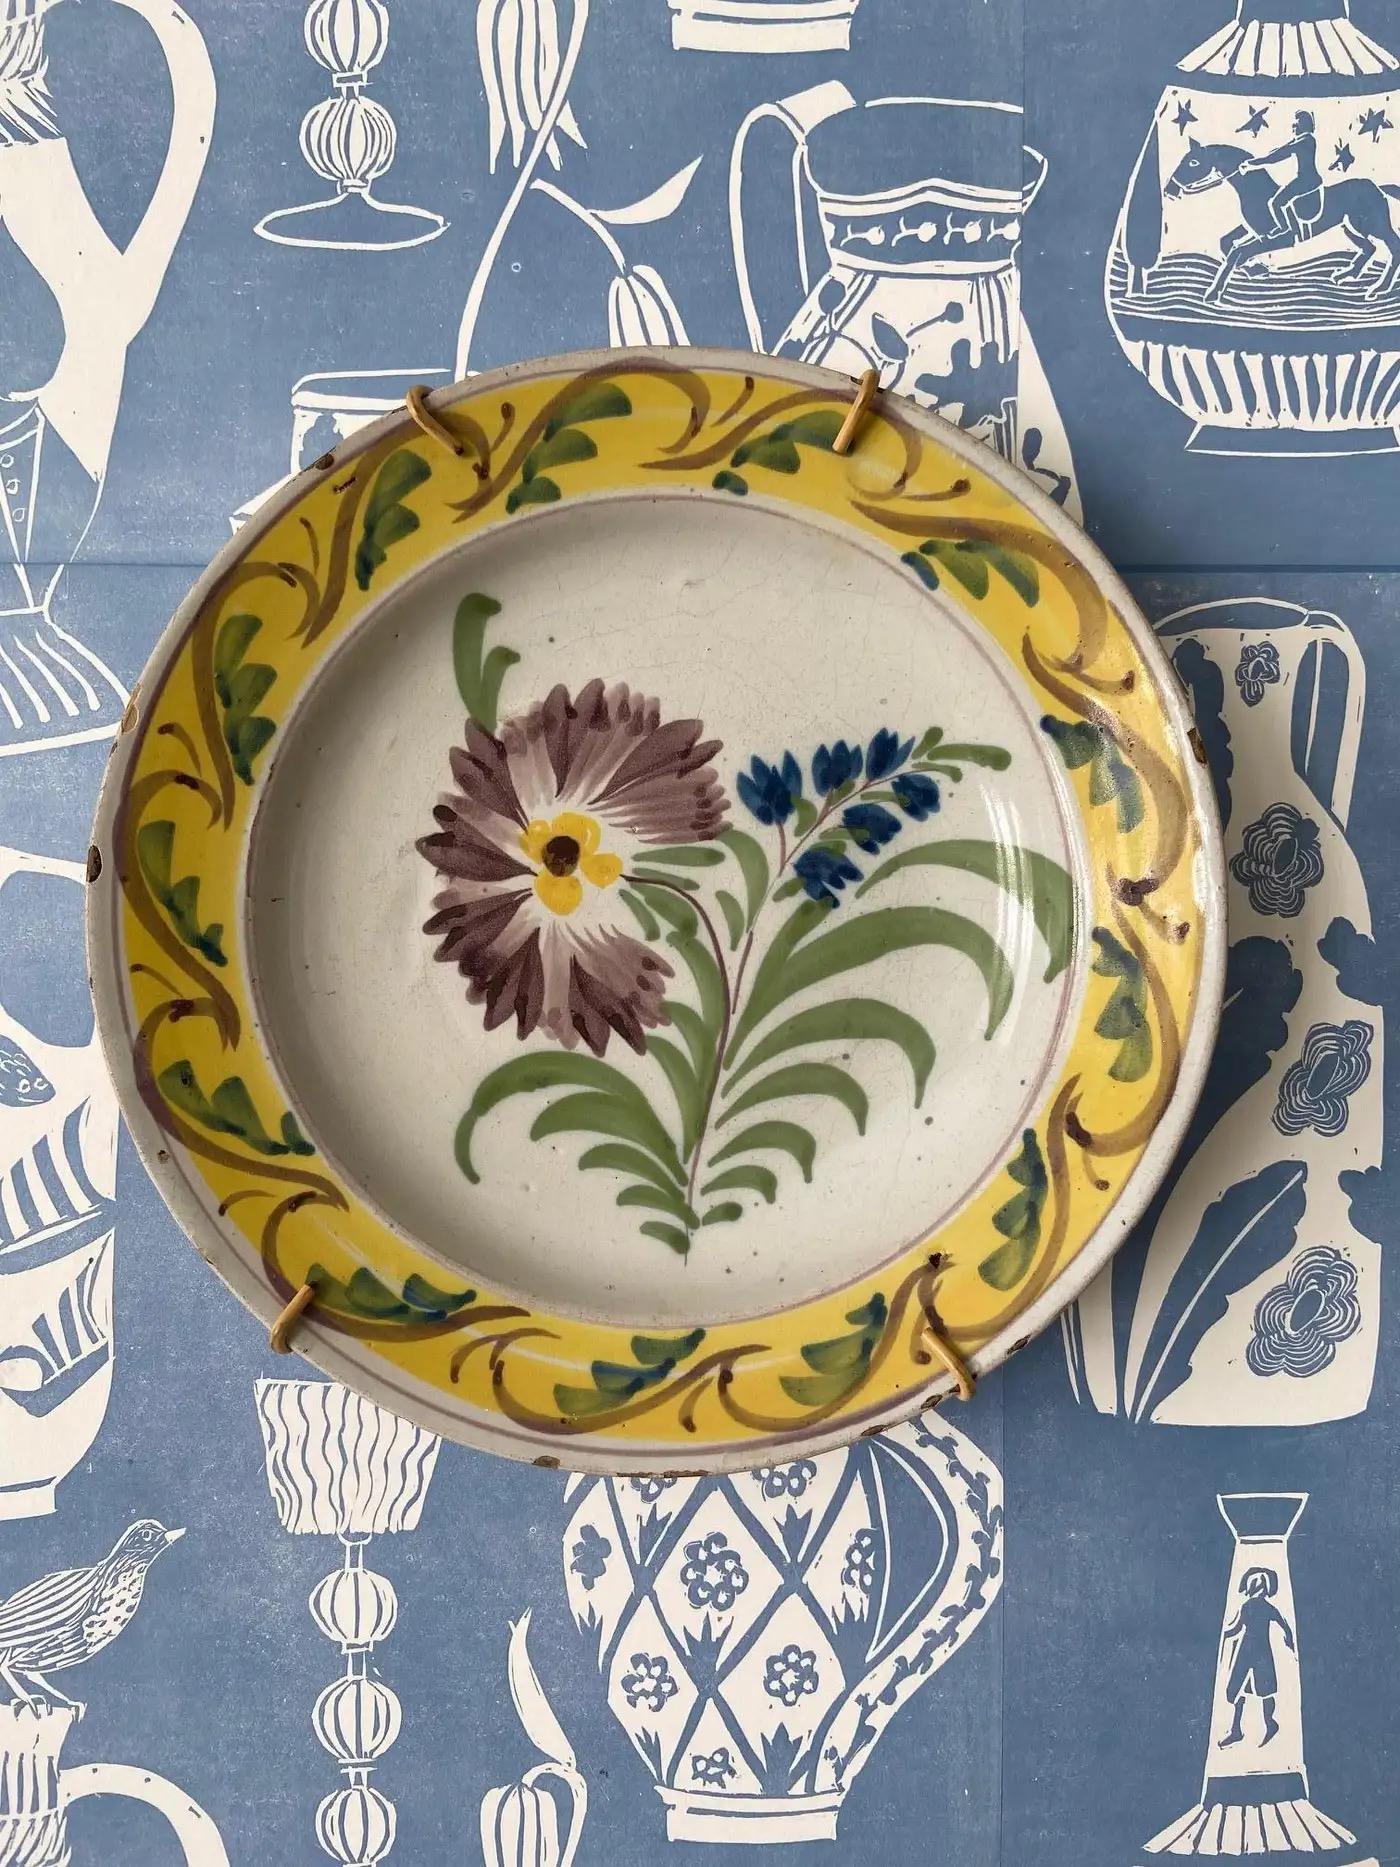 Glazed Antique Ceramic Wall Platter from Kellinghusen, Germany, Early 19th Century